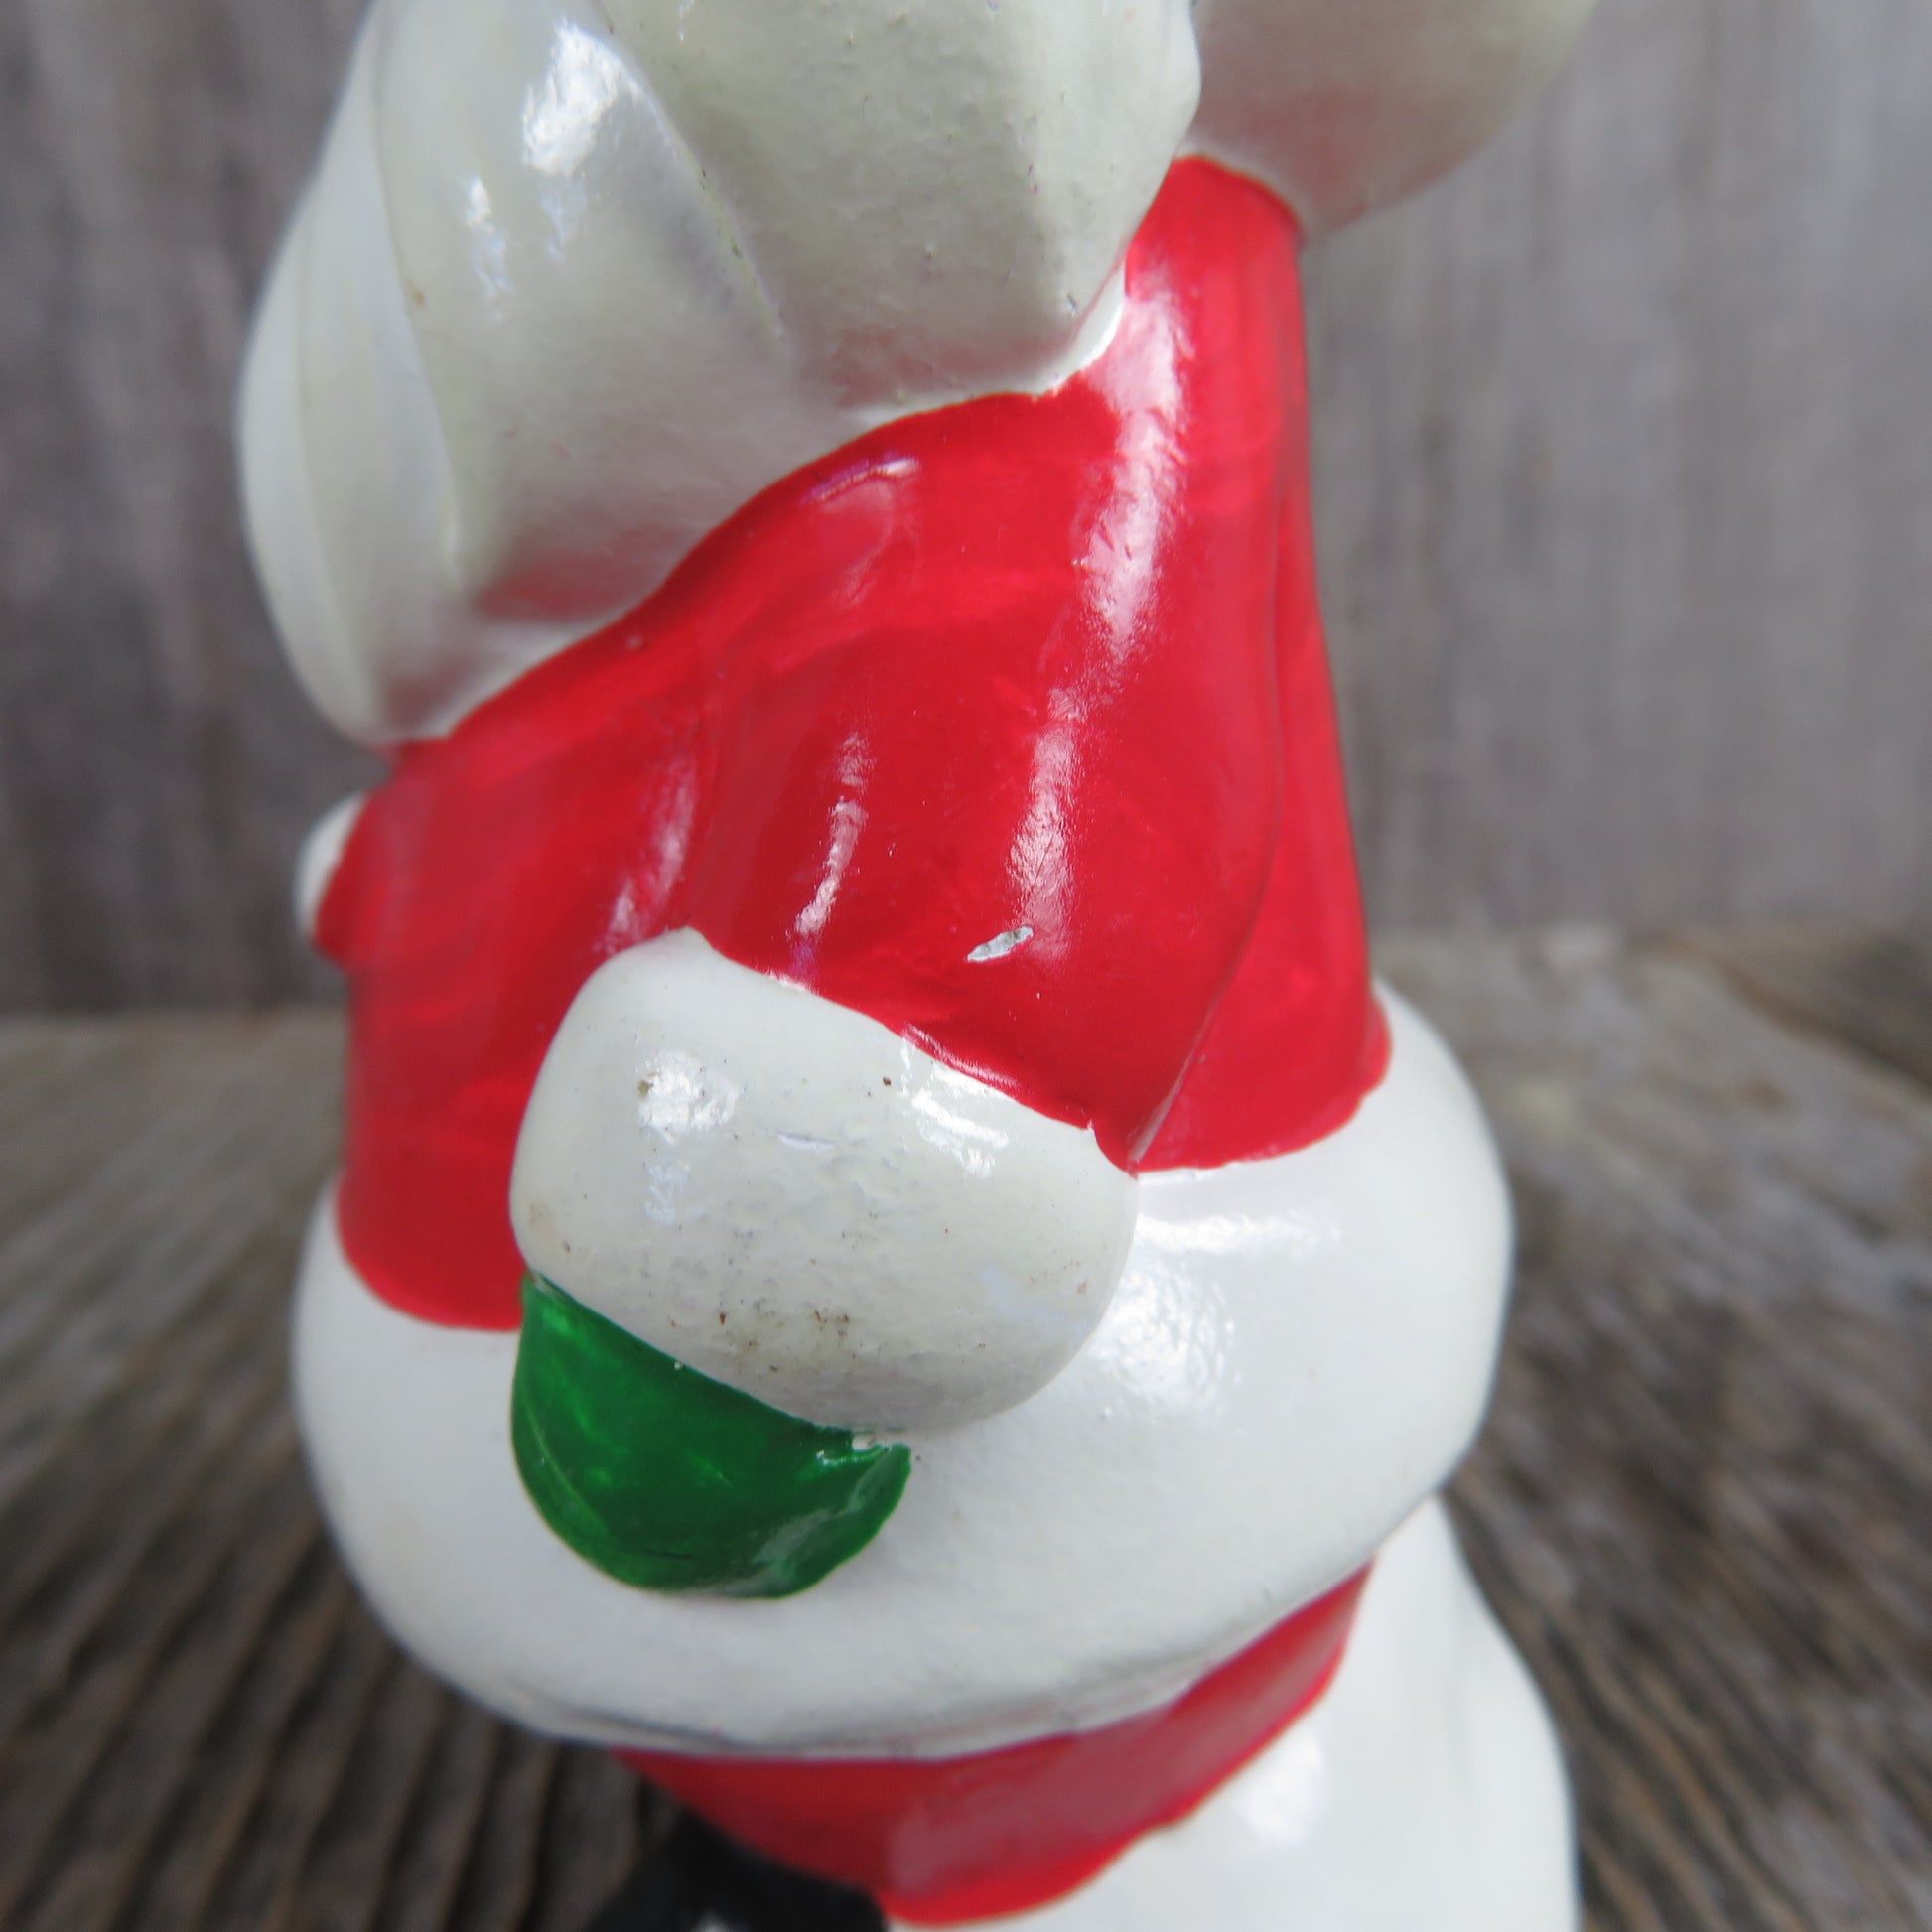 Vintage Santa Claus Chalkware Figurine Christmas Red White Joseph Figure - At Grandma's Table